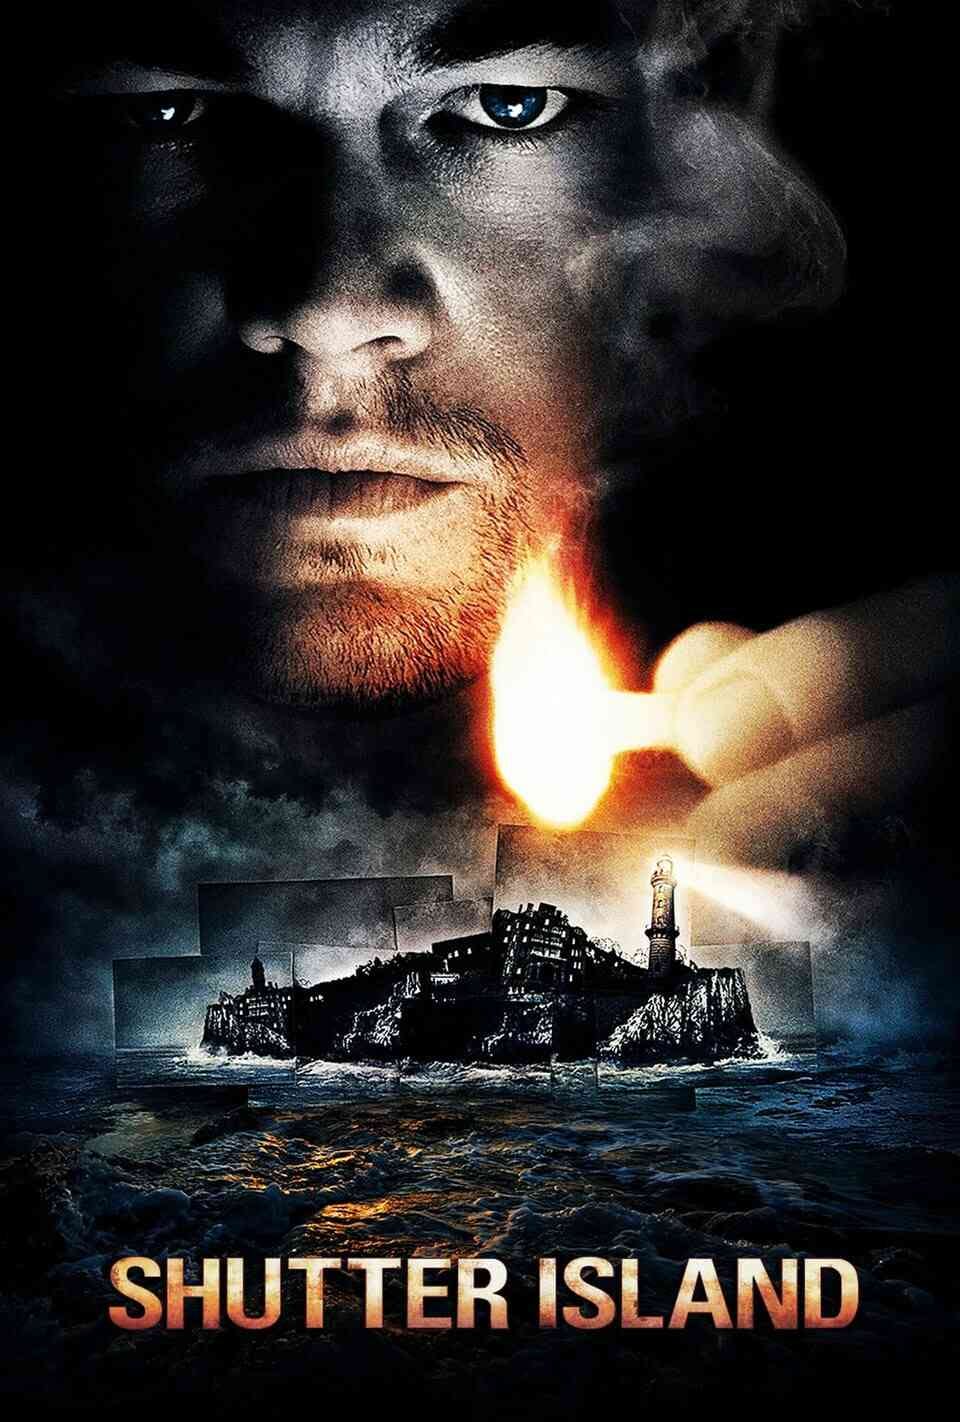 Read Shutter Island screenplay (poster)